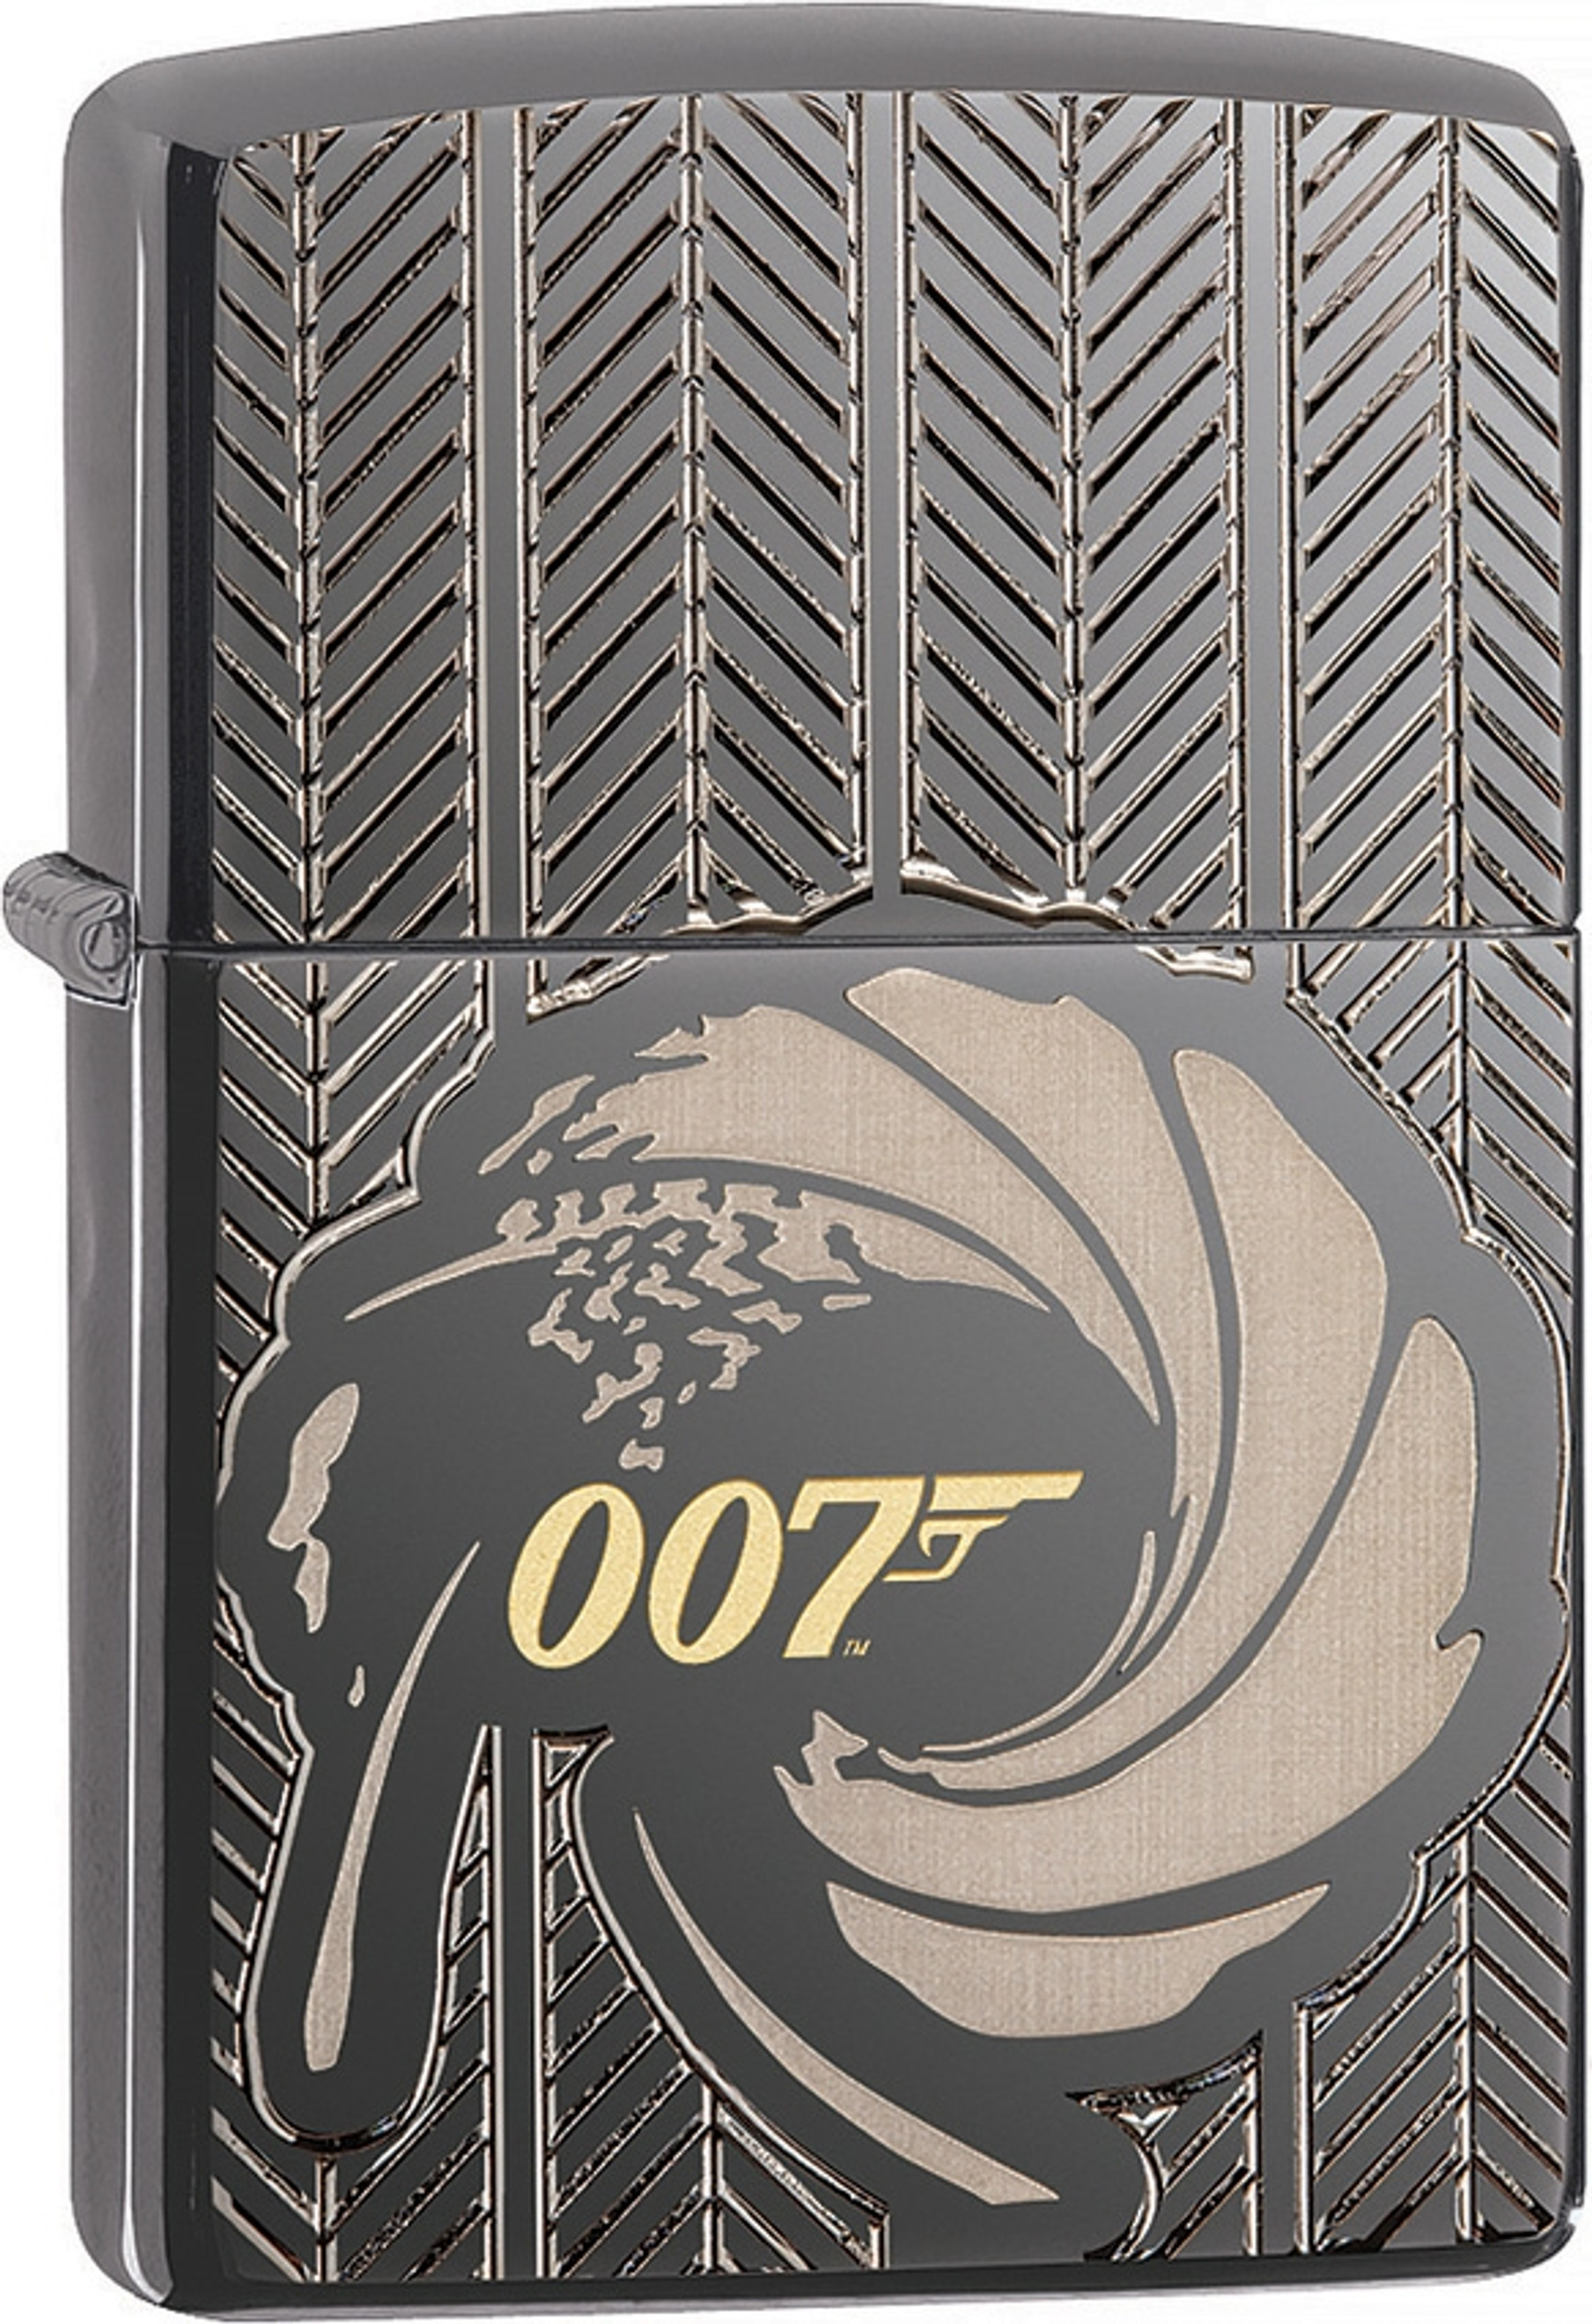 James Bond Lighter